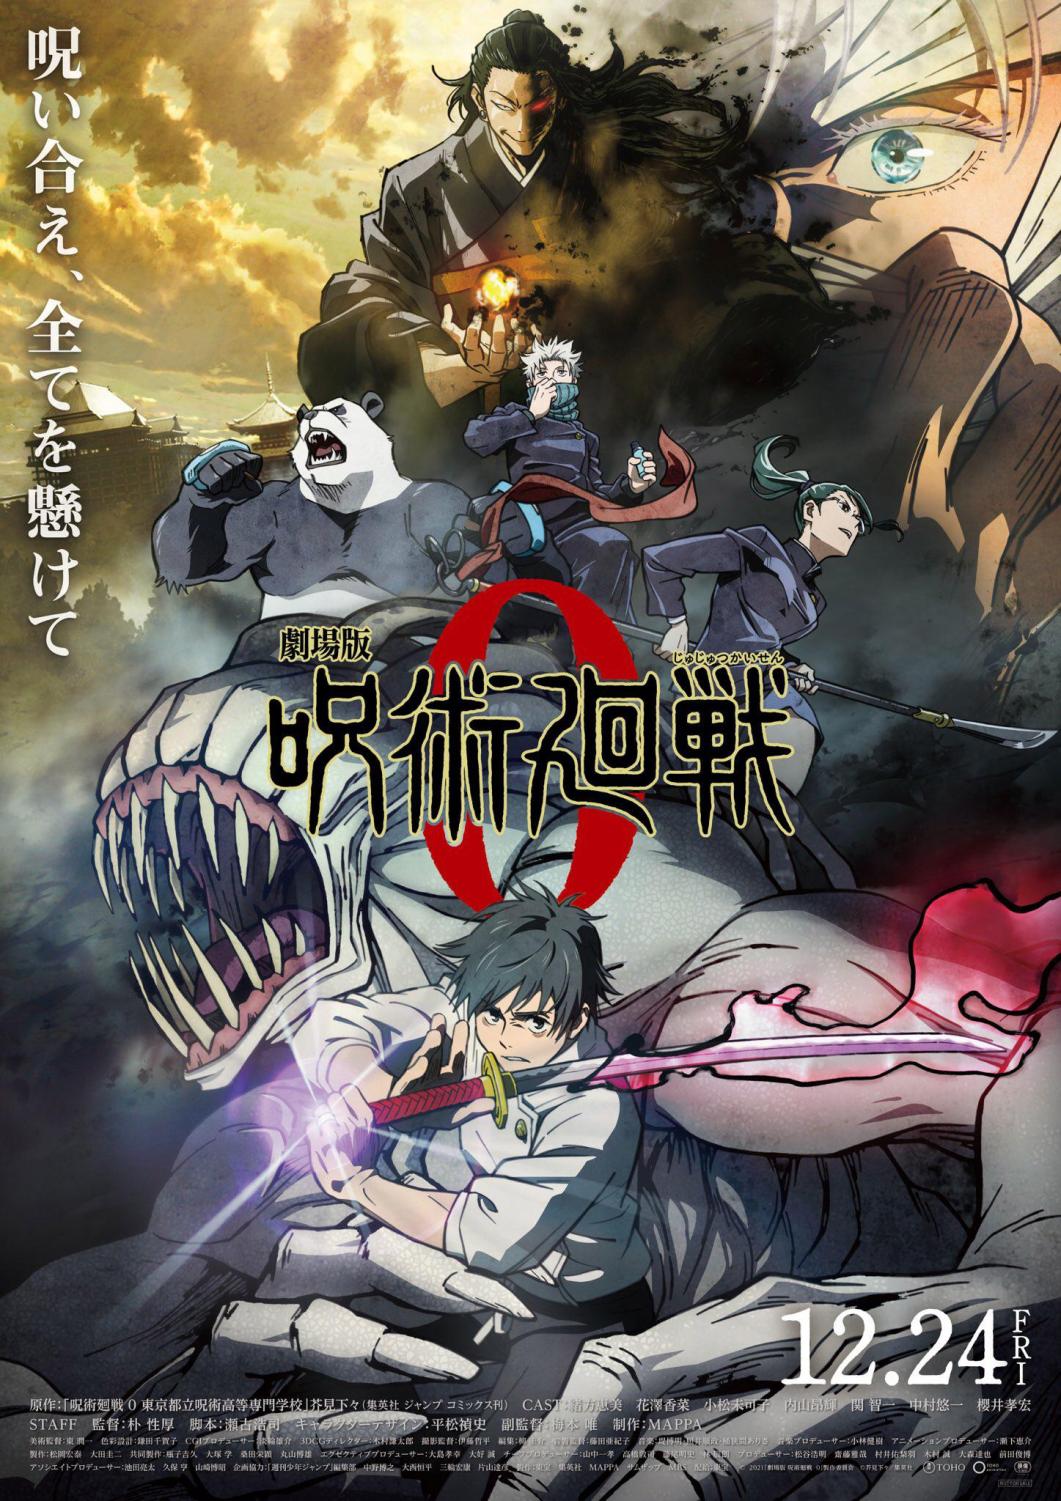 Jujutsu Kaisen' continues recent splash of anime movies – The